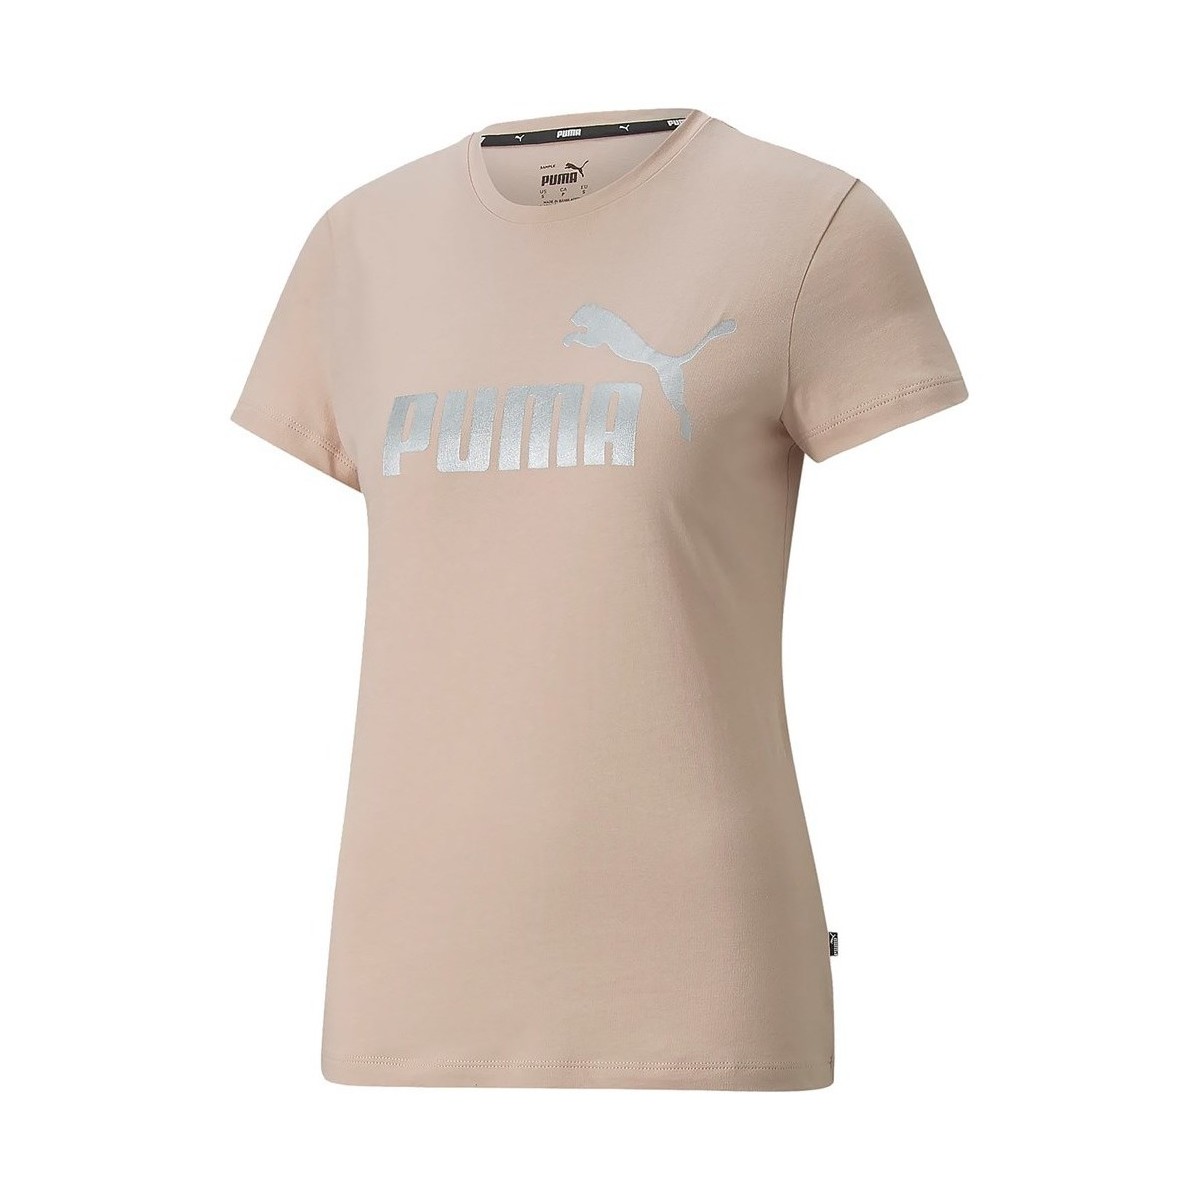 Vêtements Femme T-shirts manches courtes Puma Ess Metallic Logo Tee Beige